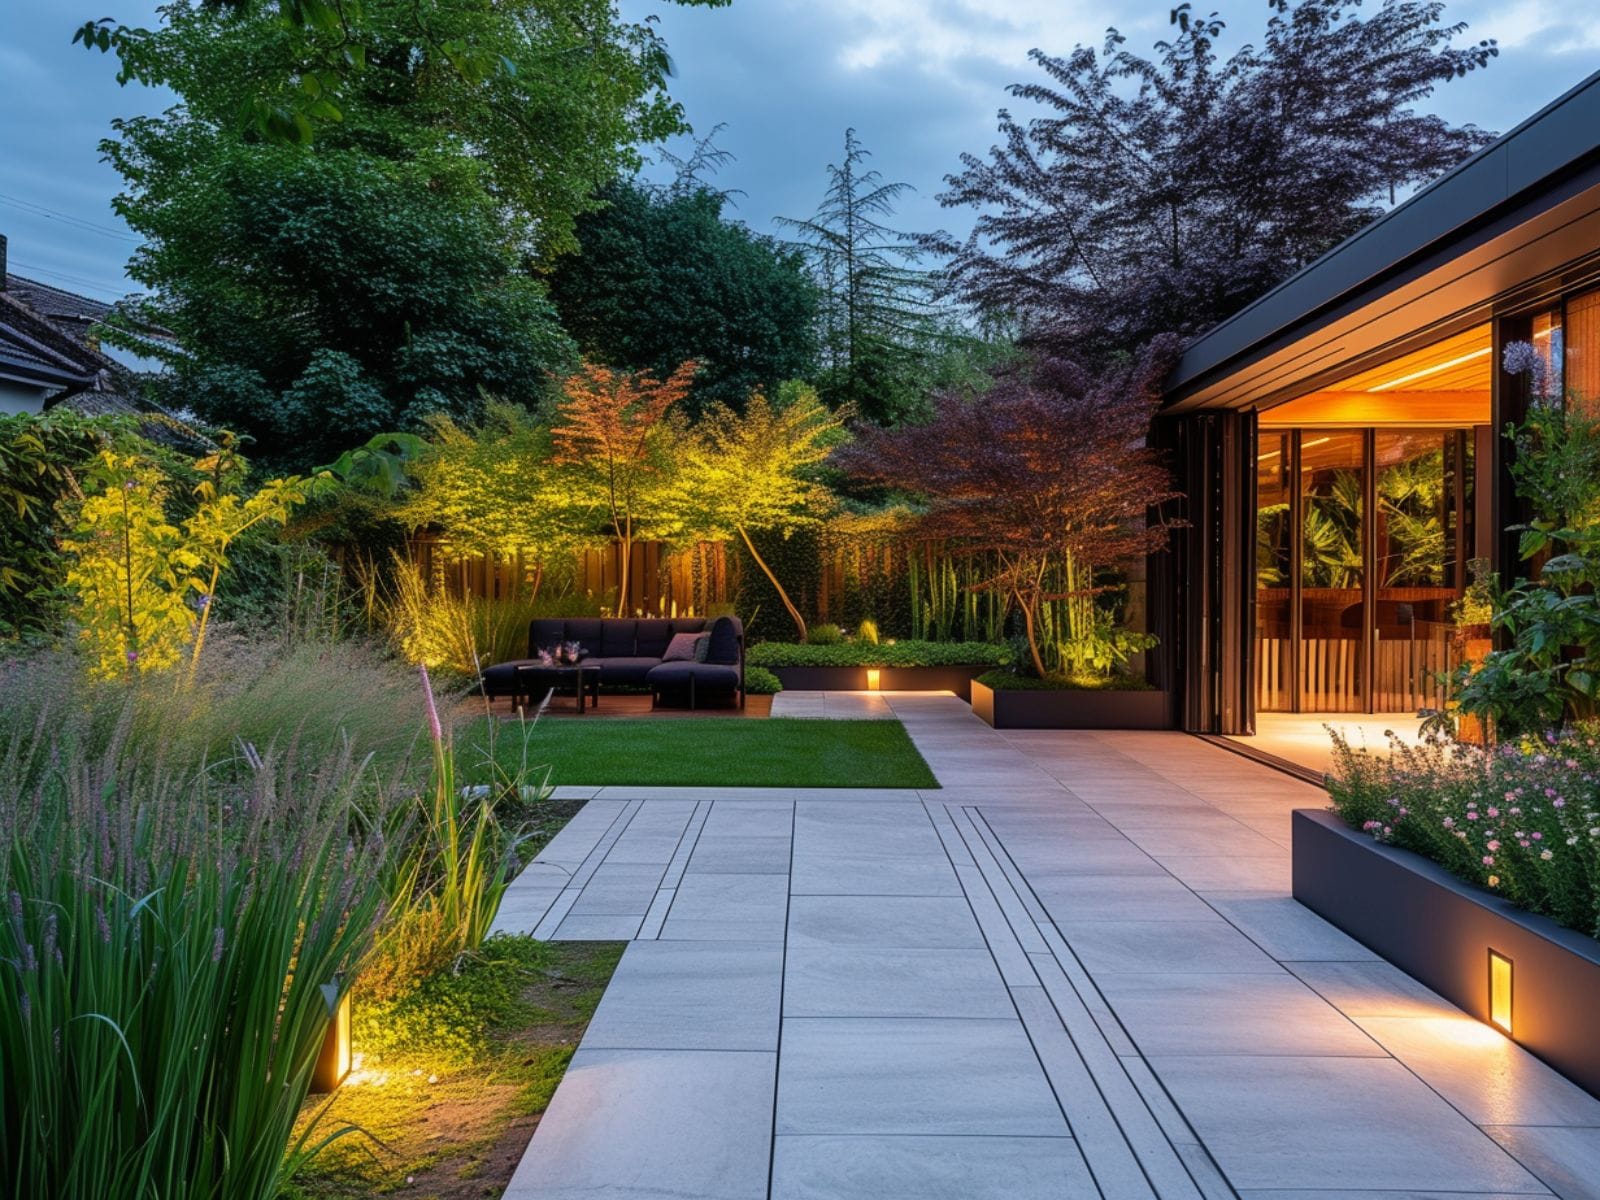 Multiple spotlights illuminating a garden and backyard for landscaping